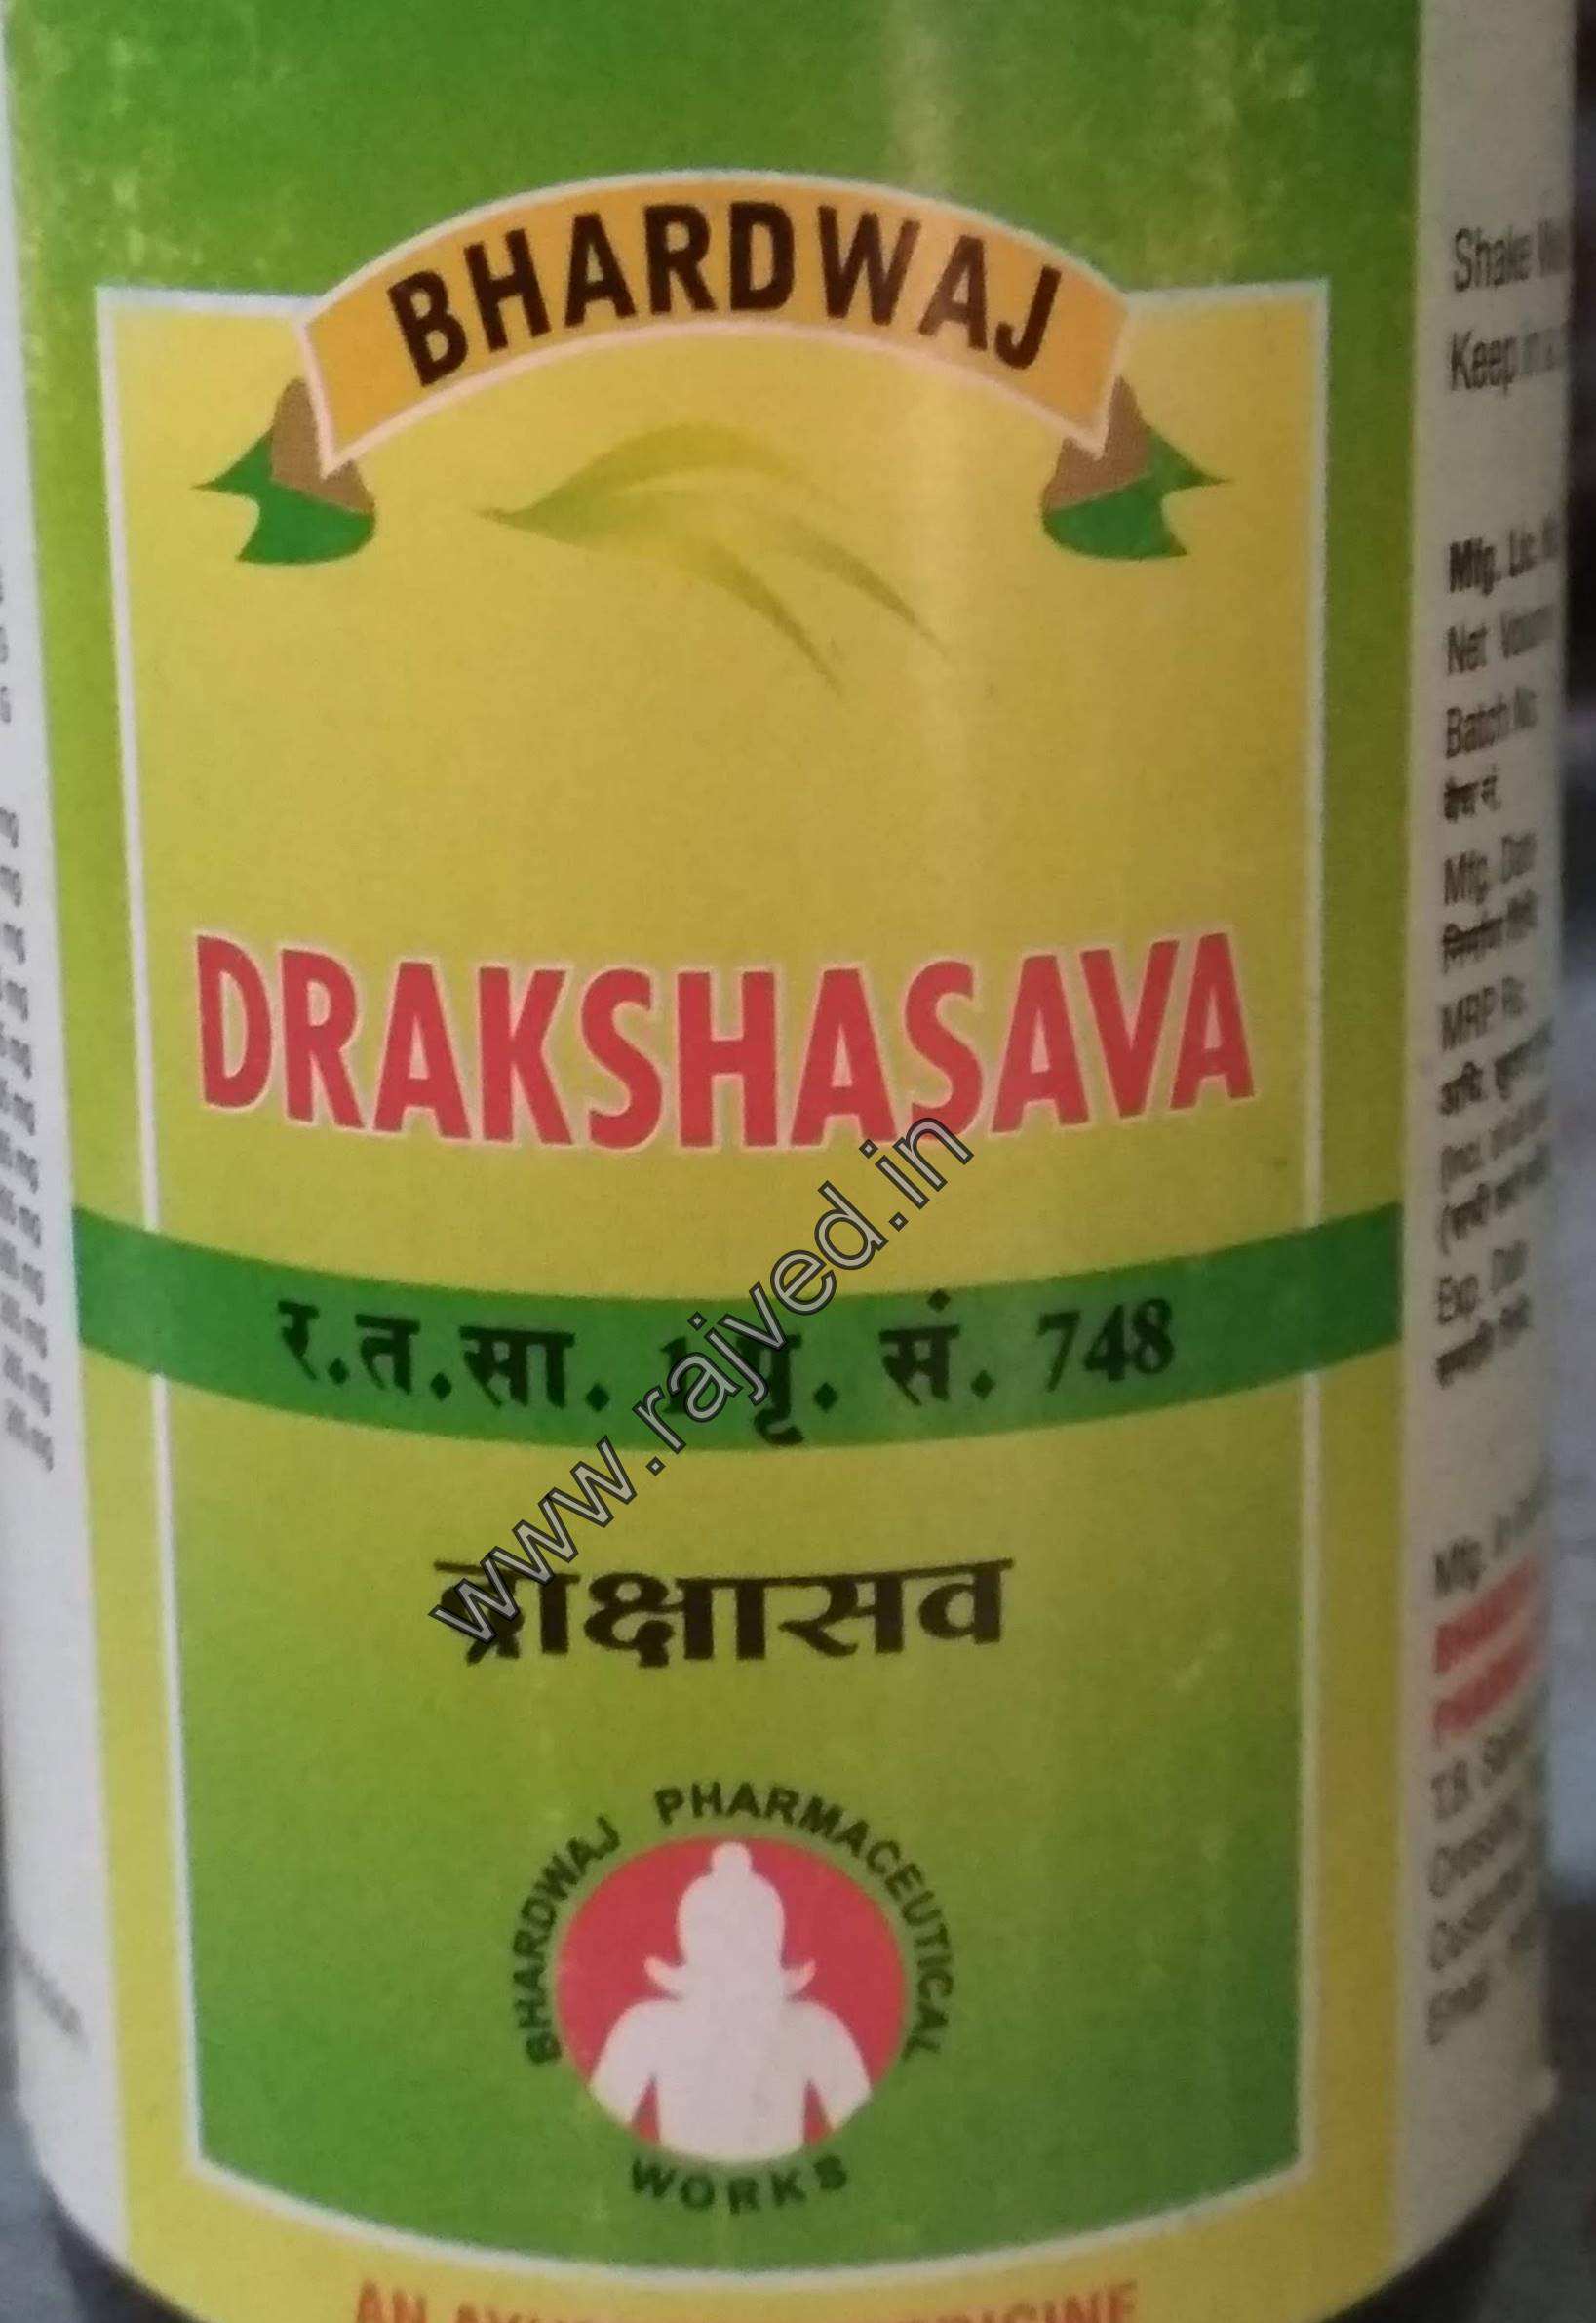 drakshasav 1ltr bhardwaj pharmaceuticals indore